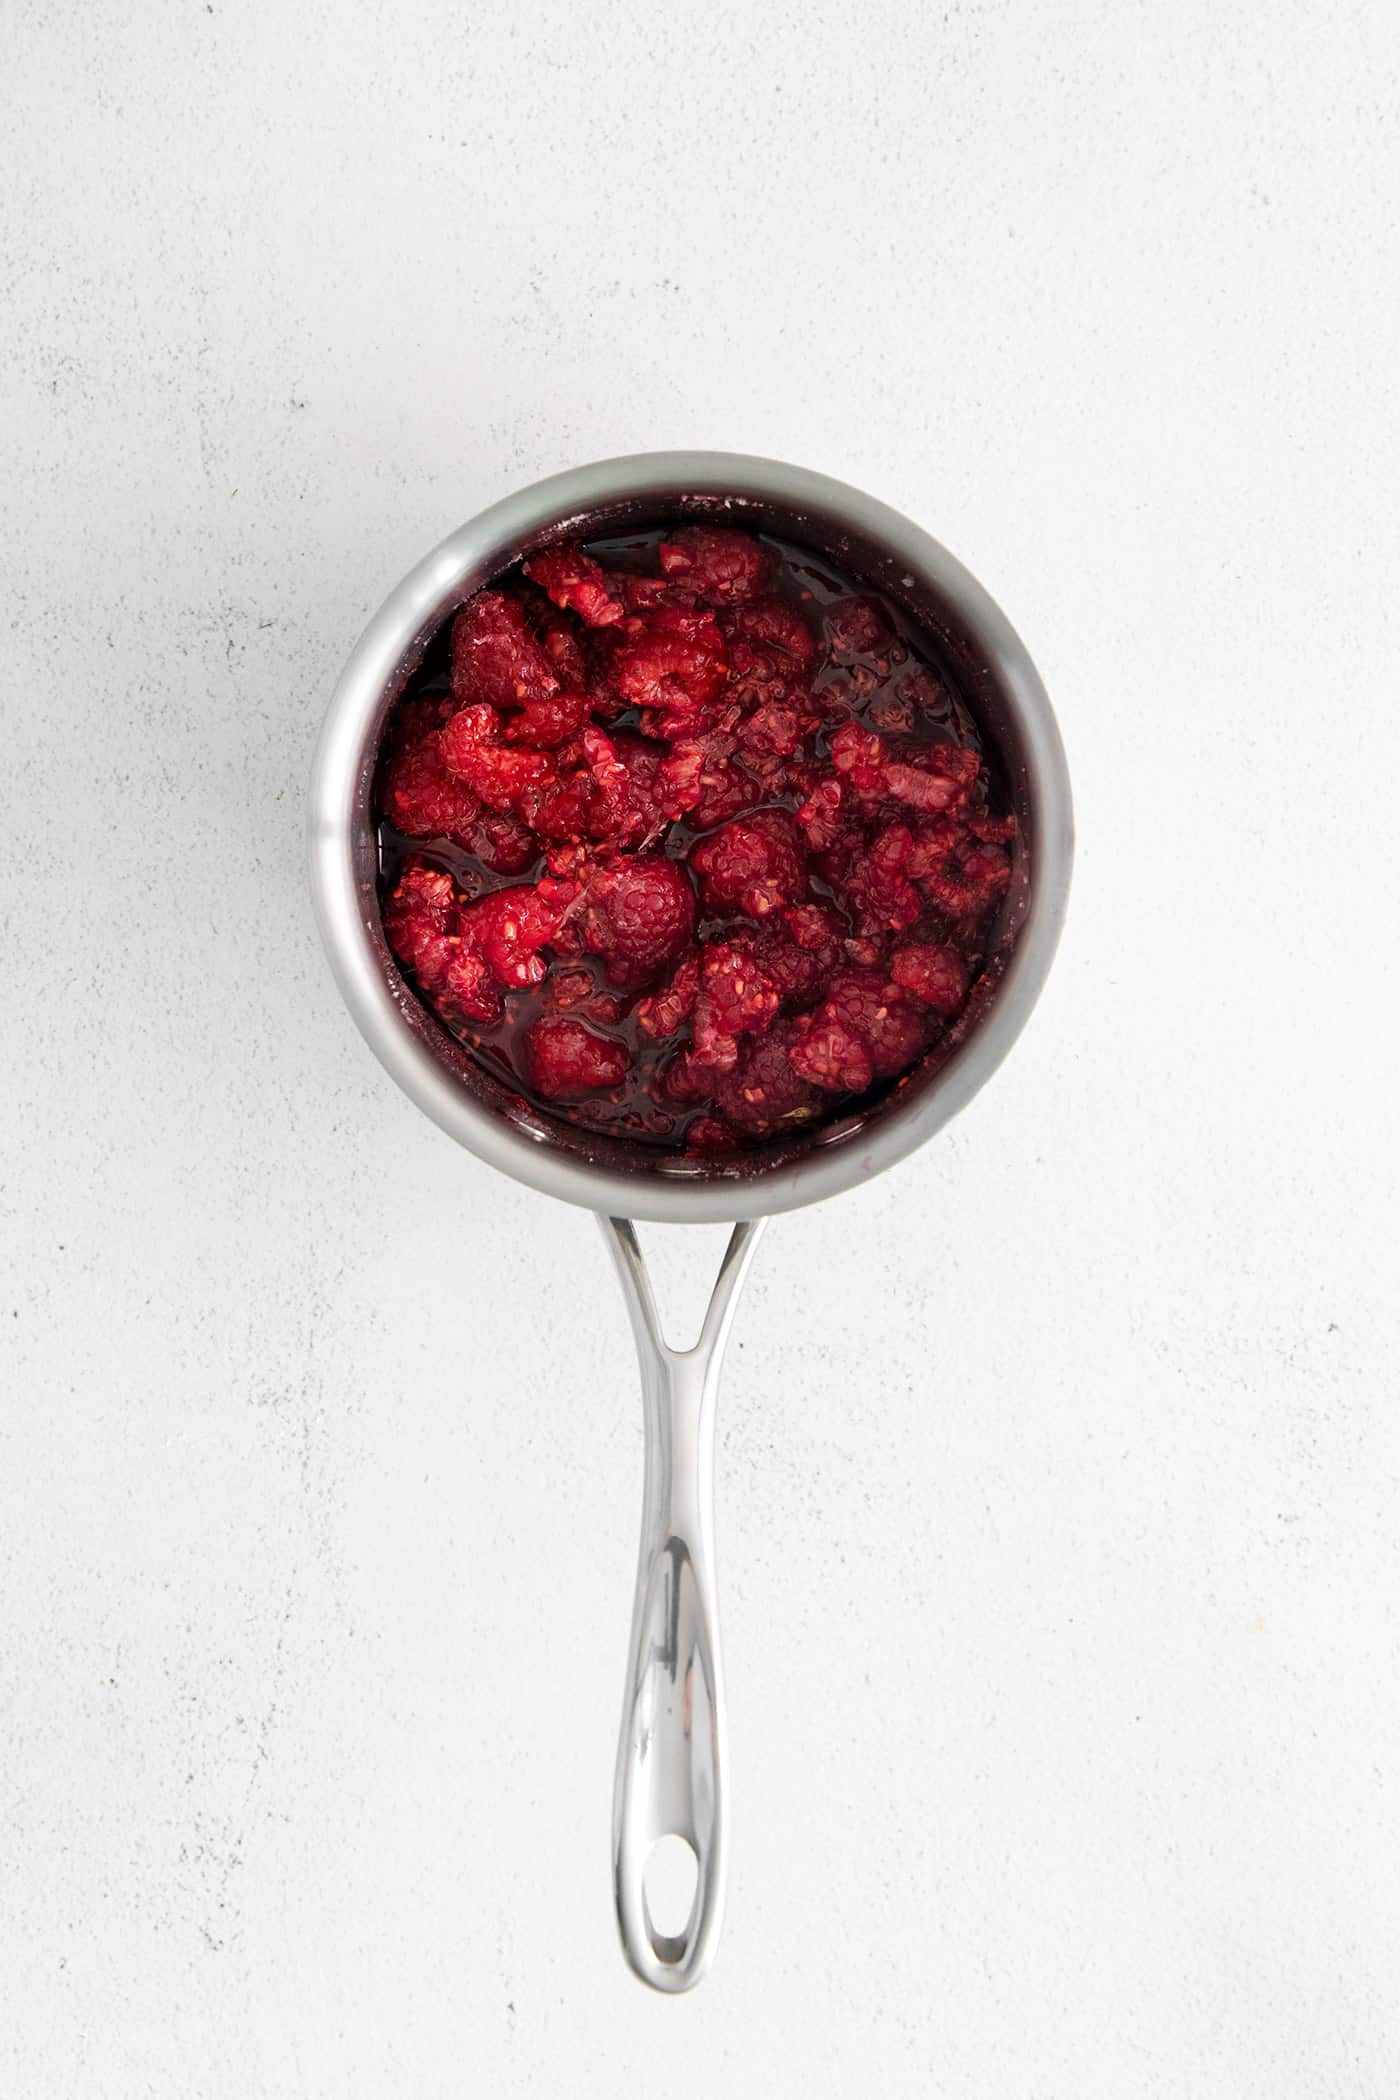 Macerated raspberries in a saucepan